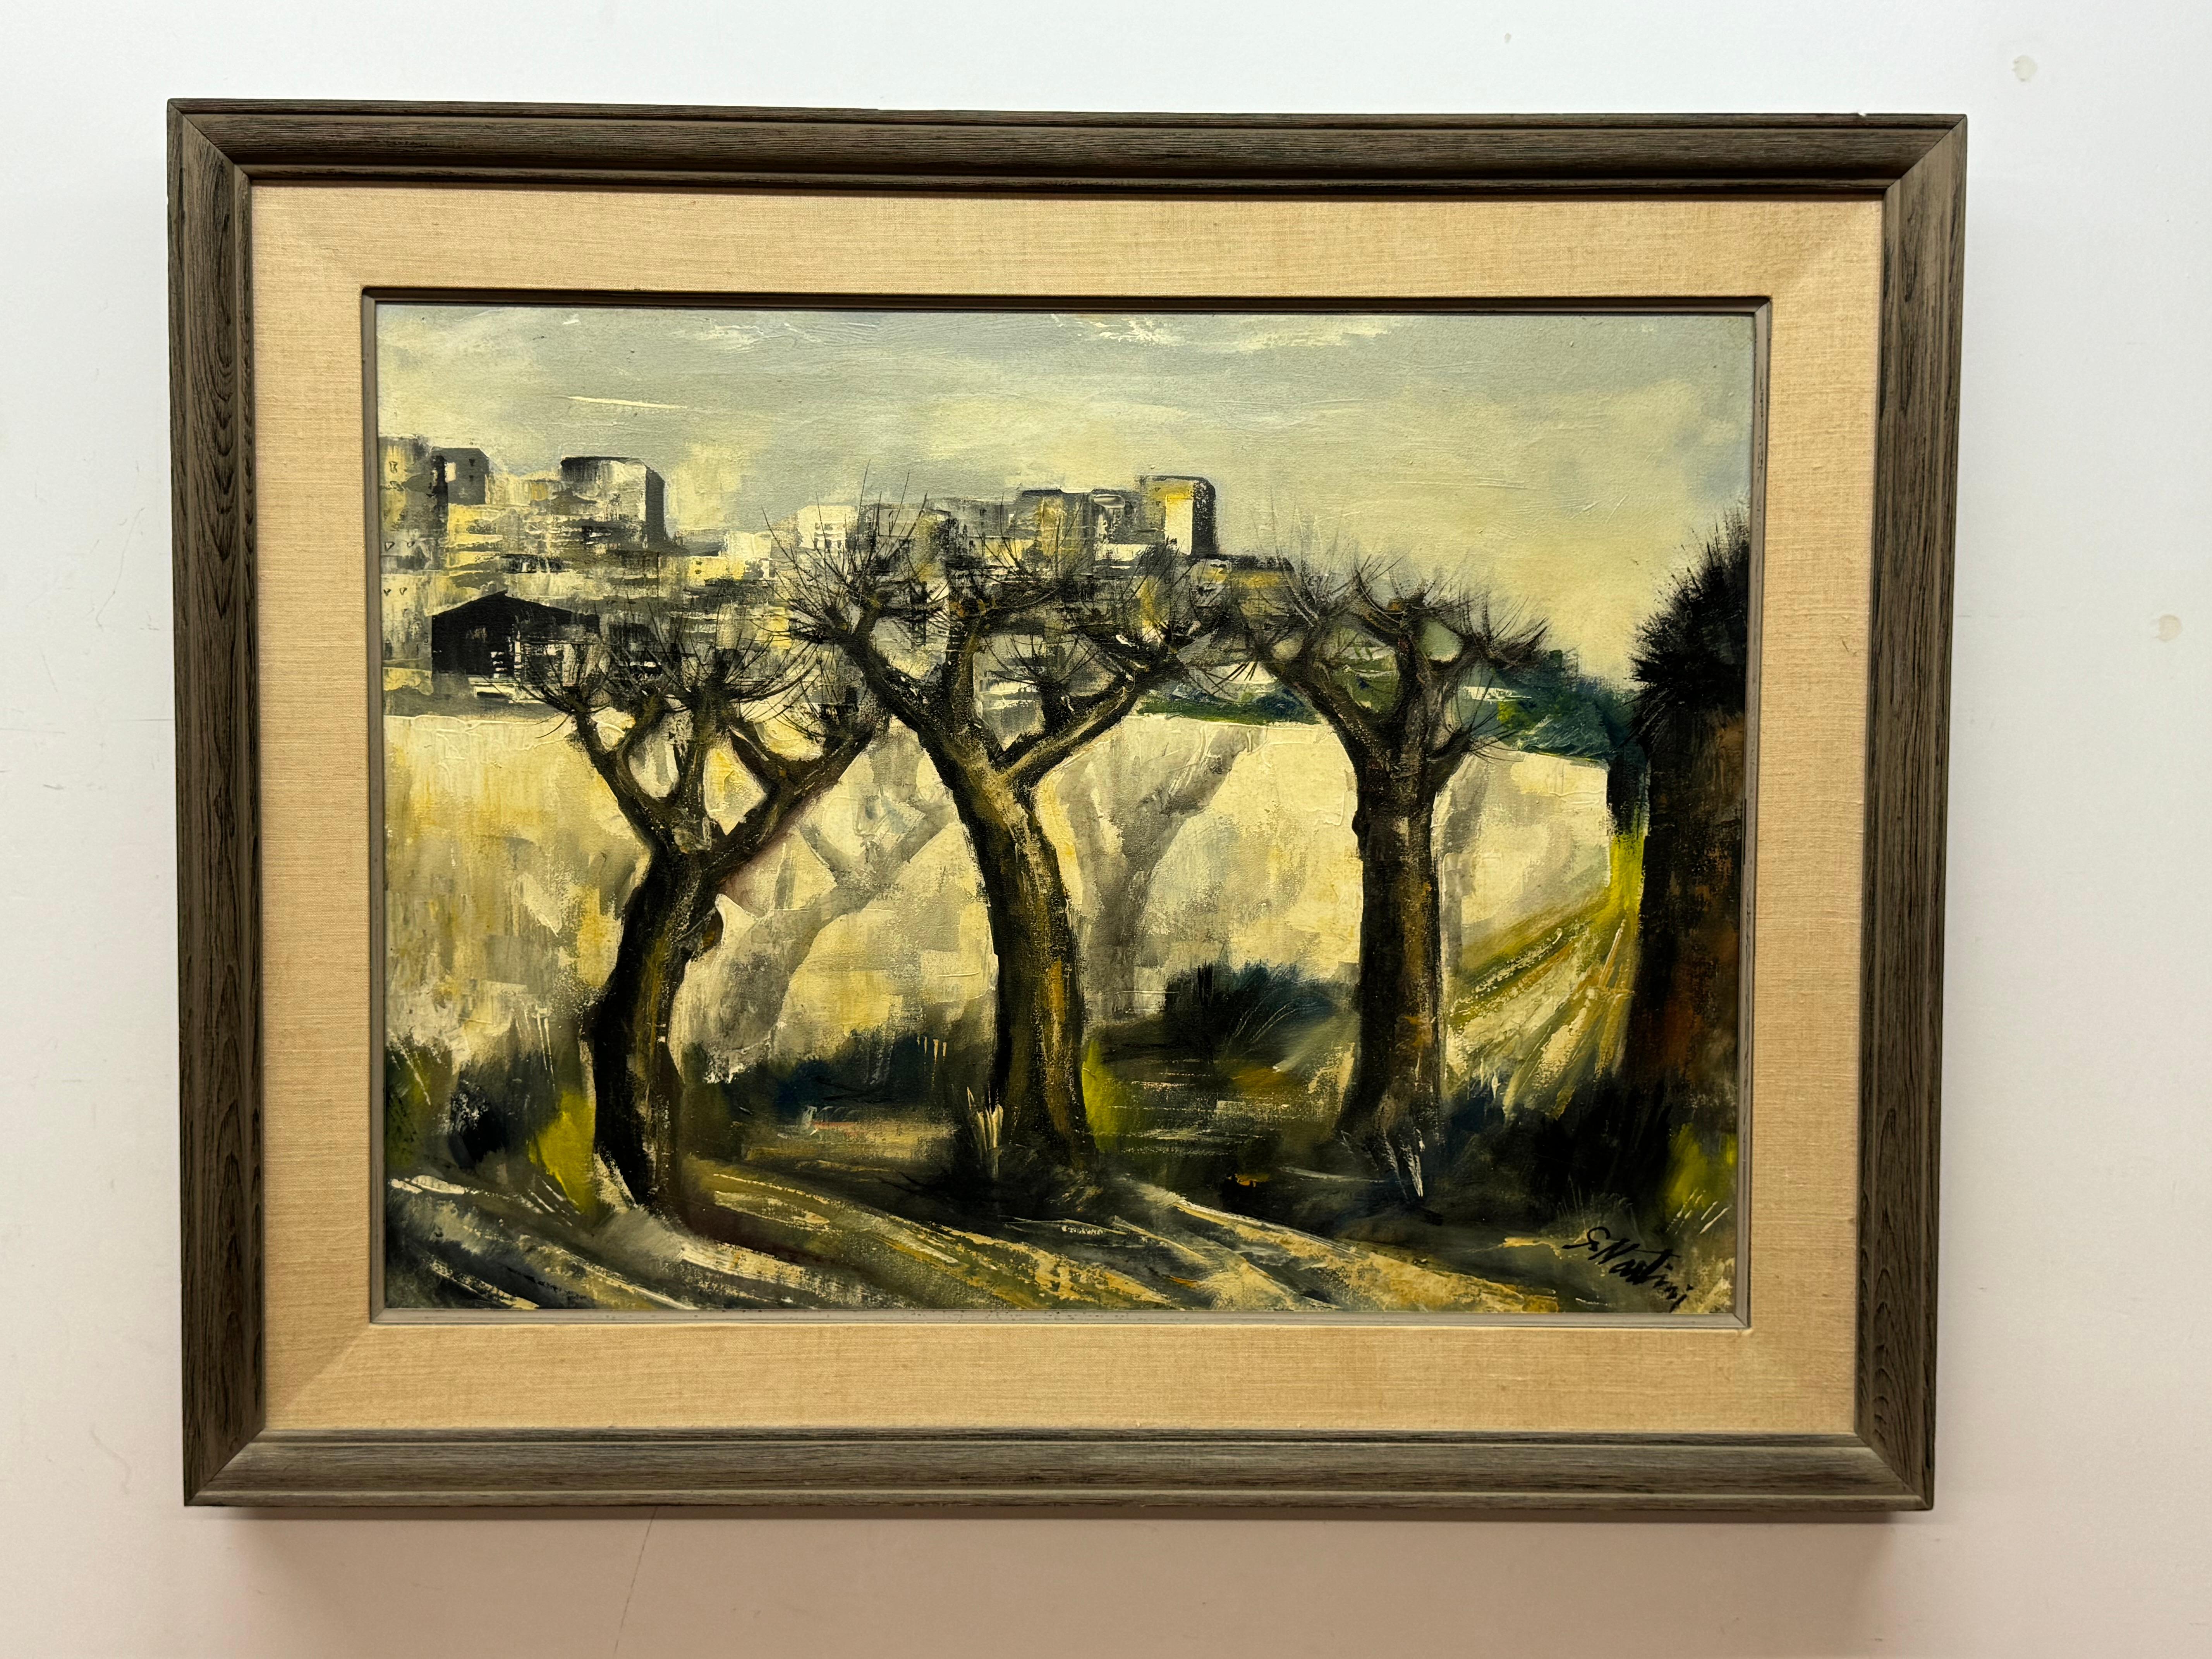 Landscape Painting G. Nosdini - Paysage urbain G Nosdini avec arbres nus, et premier plan